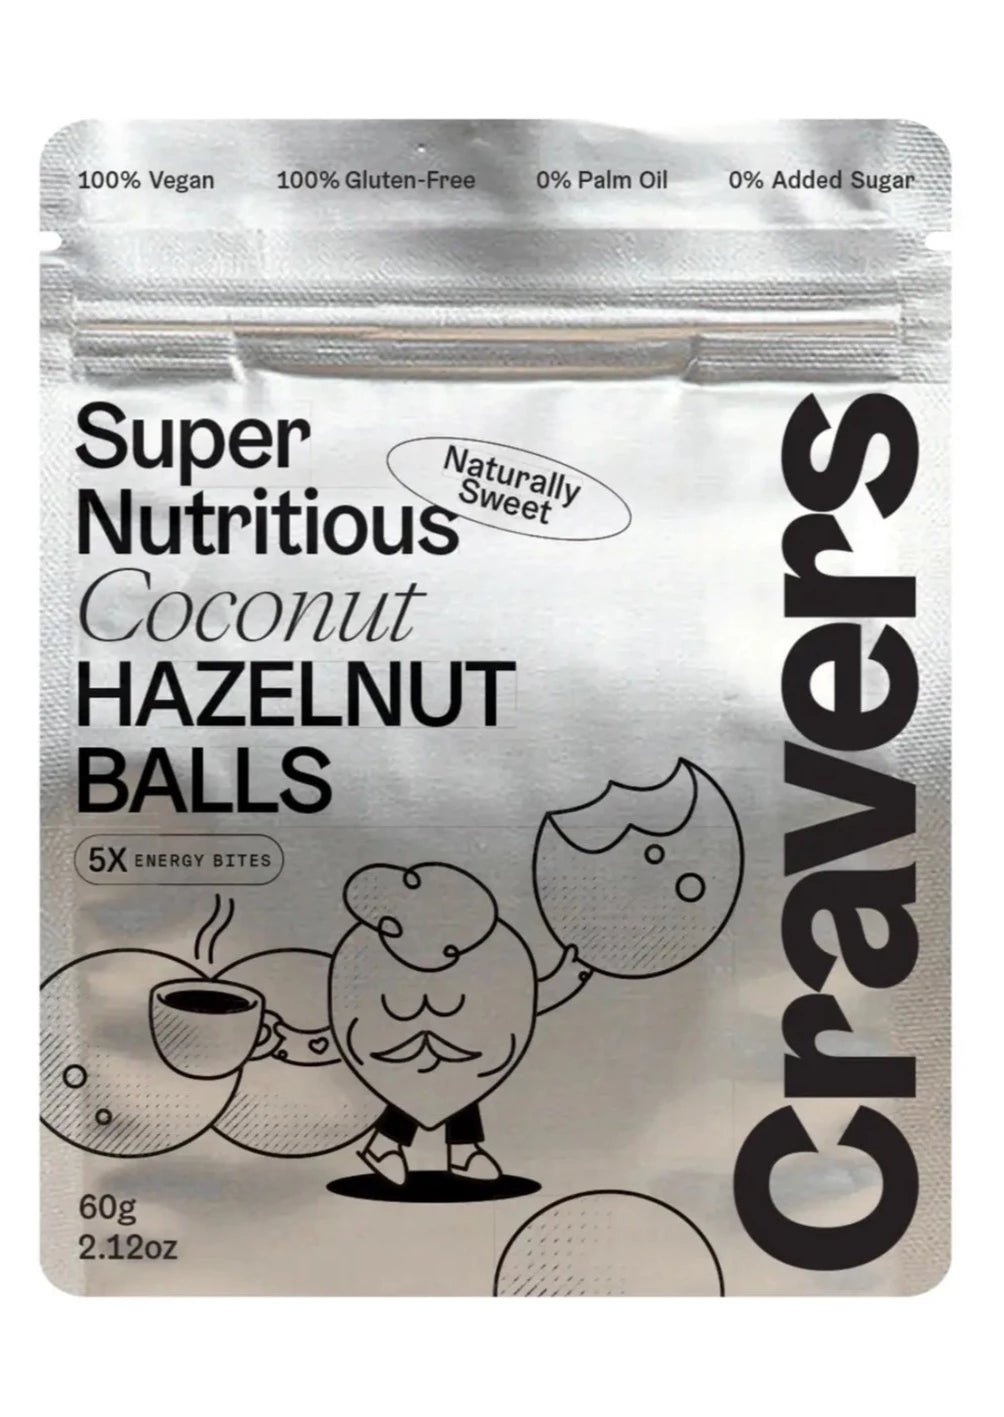 Super Nutritious Coconut Hazelnut Balls